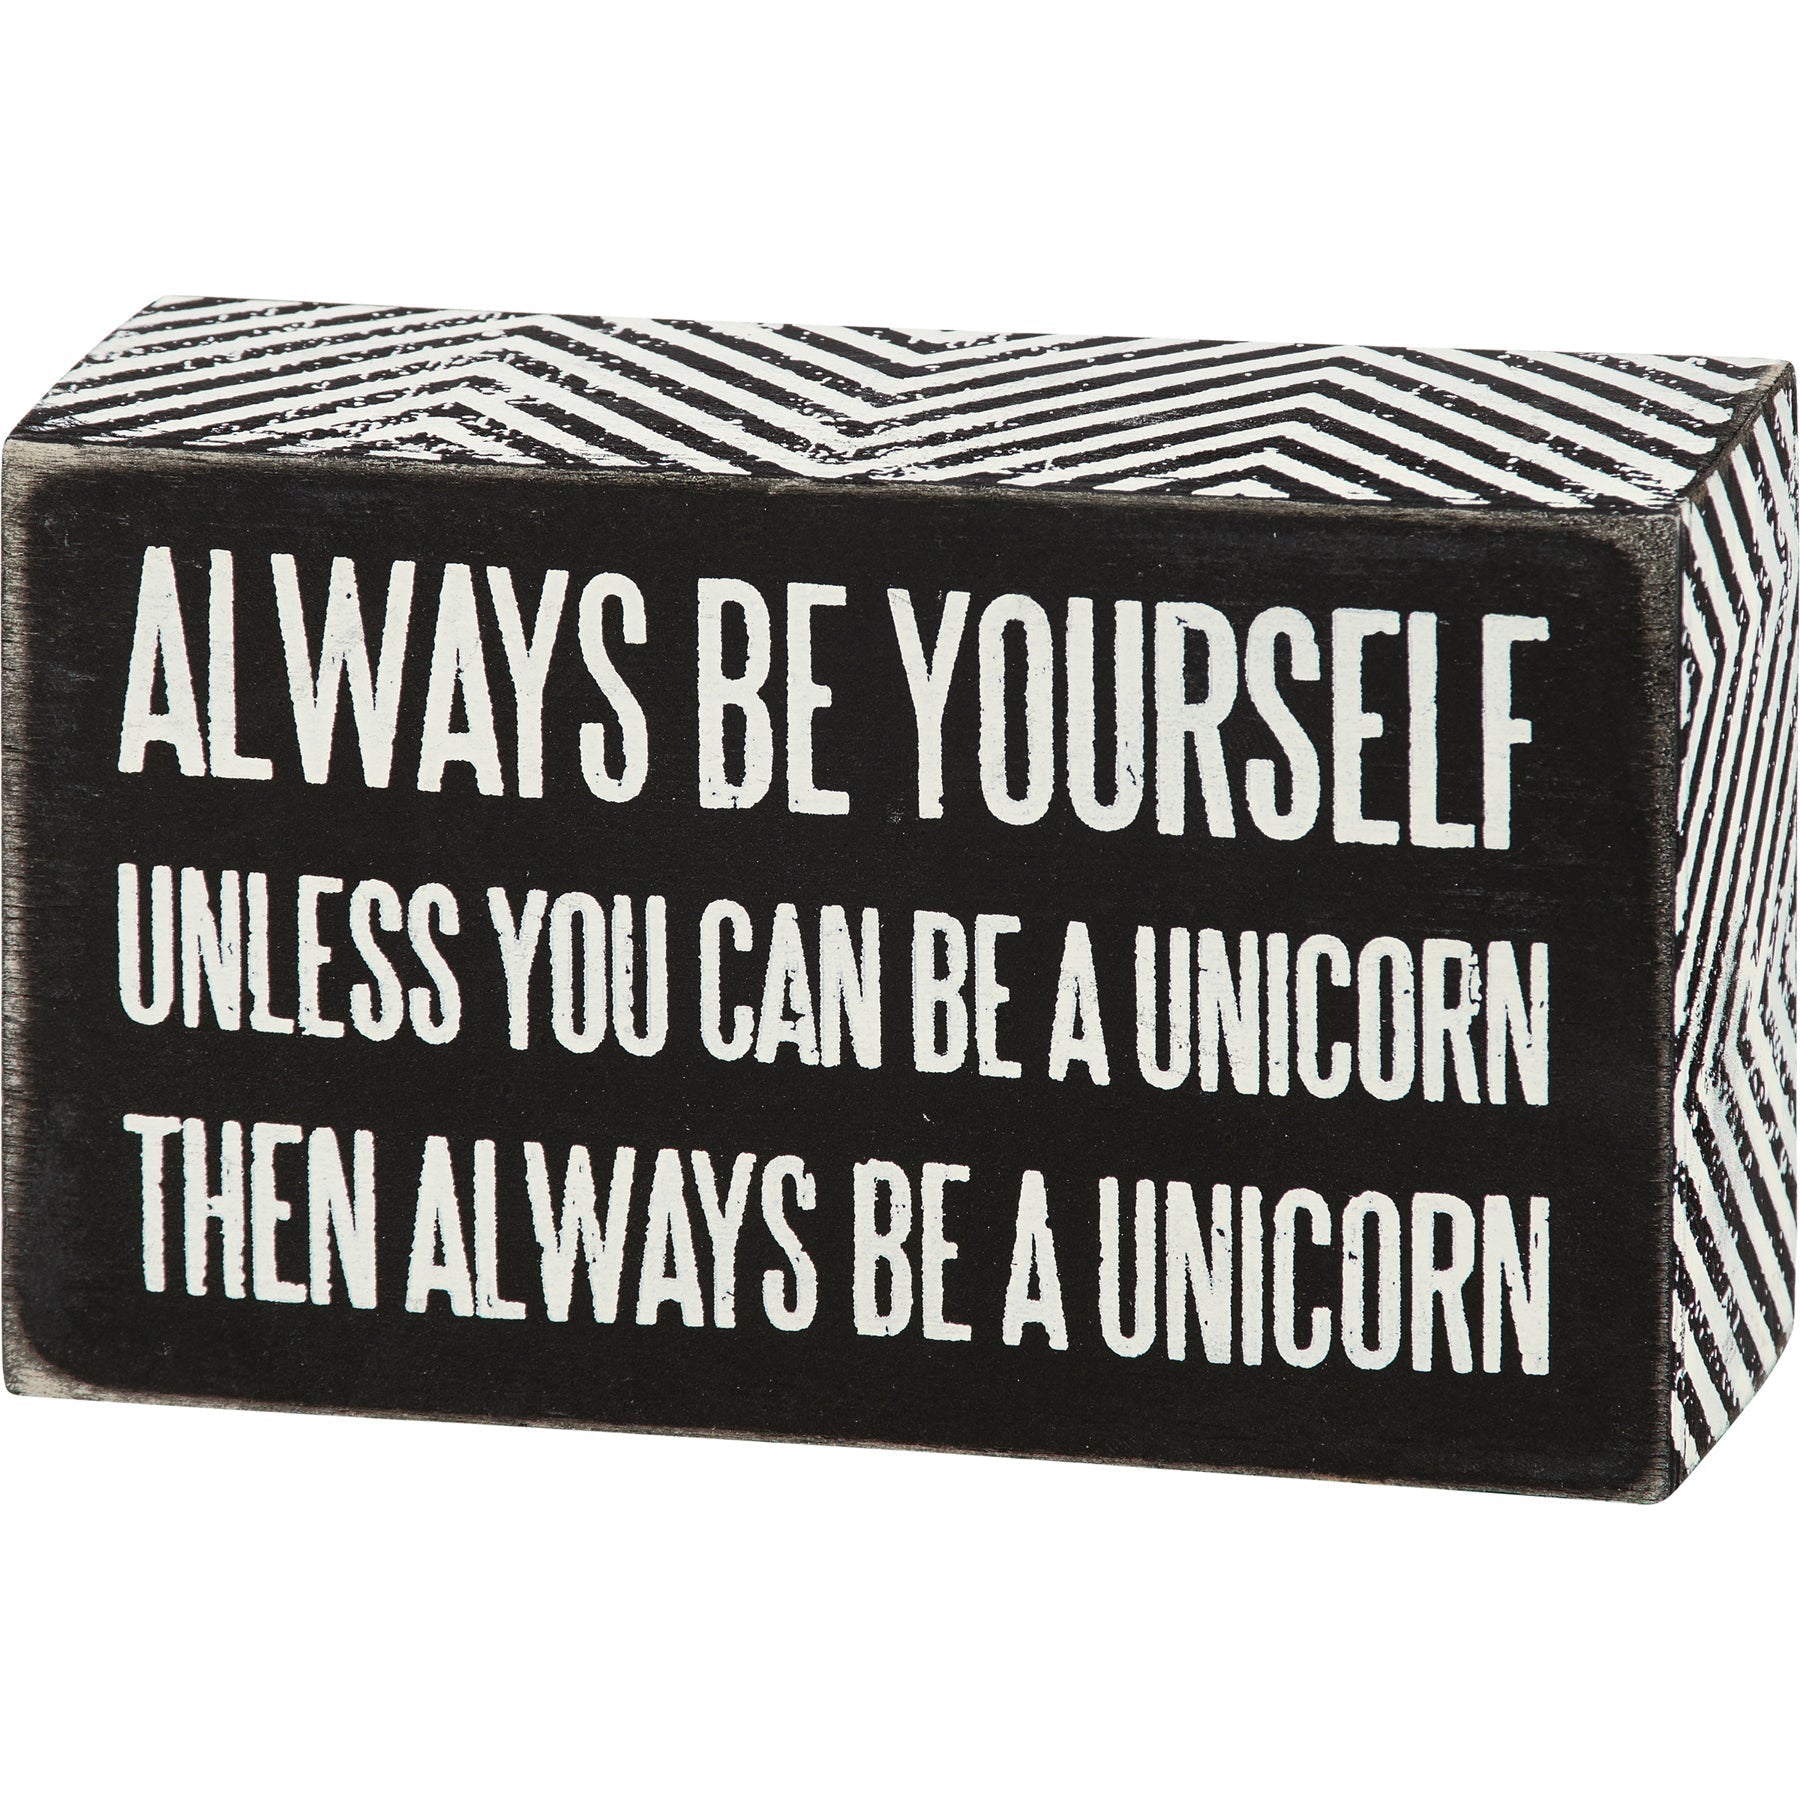 Be A Unicorn Box Sign | Classic Black and White Wall Desk Decor | 5" x 3"